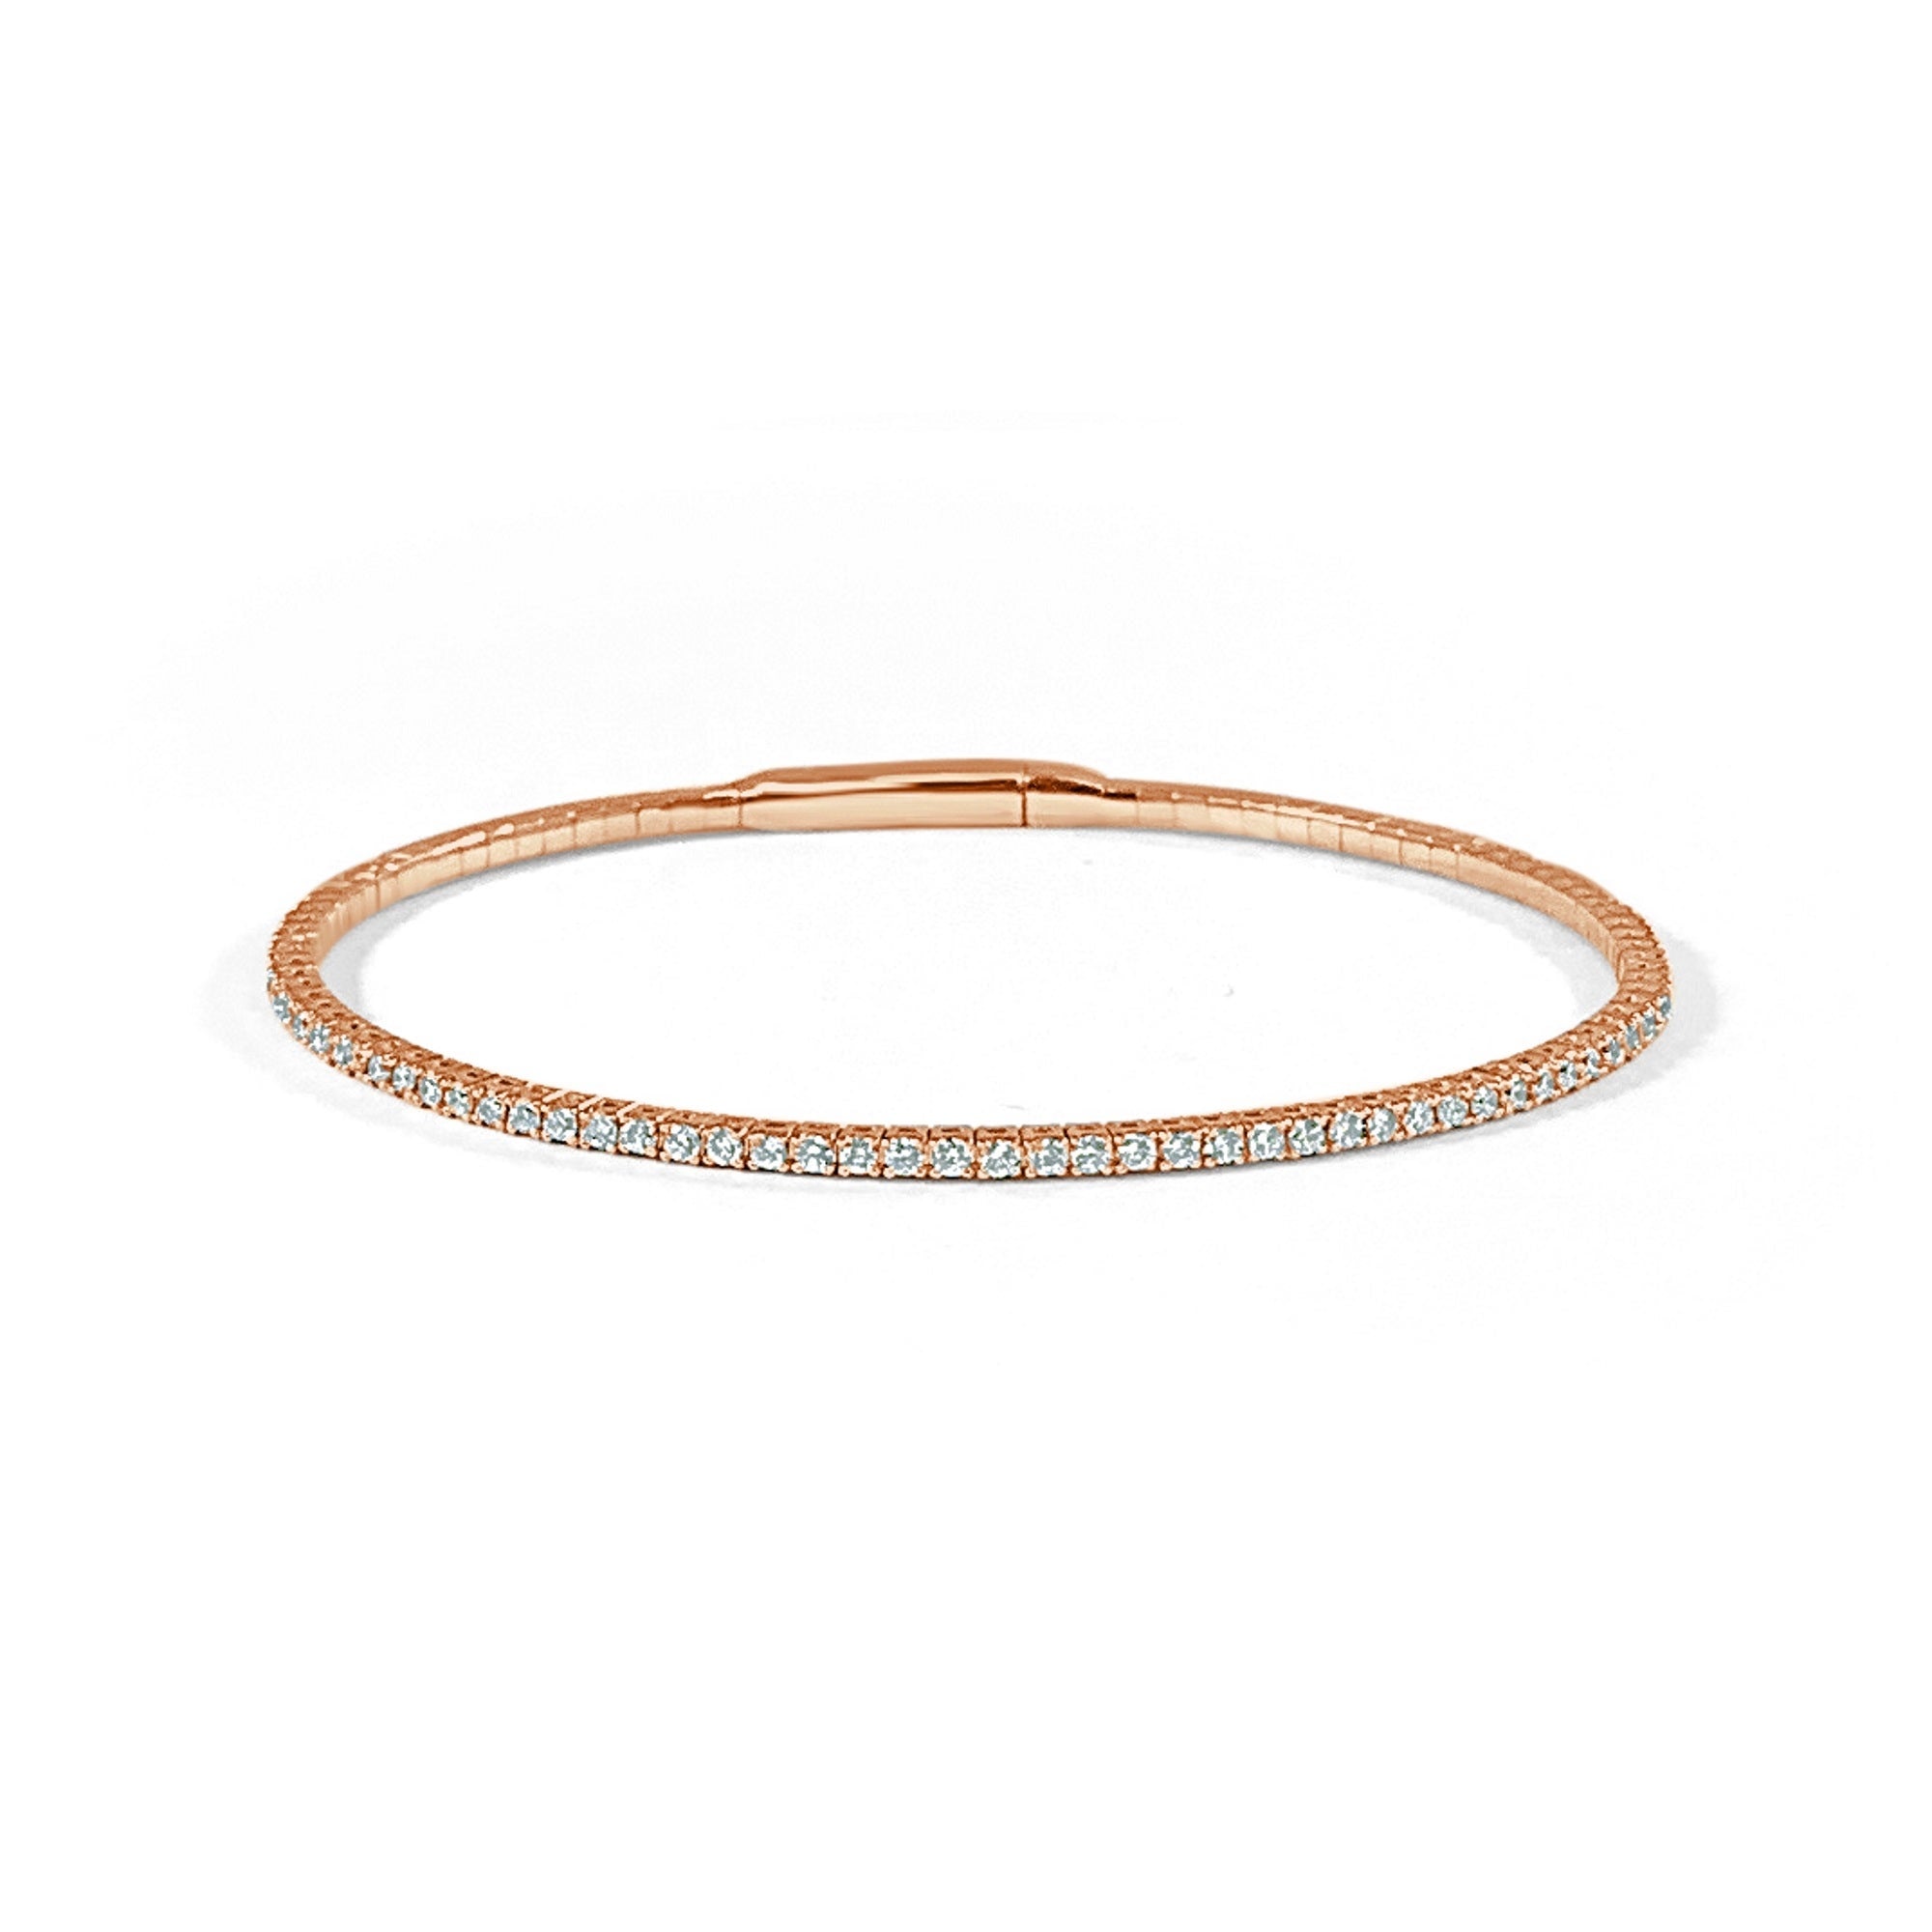 14kt Gold "FLEXI" Bracelet with Natural Round Brilliant Cut Diamonds